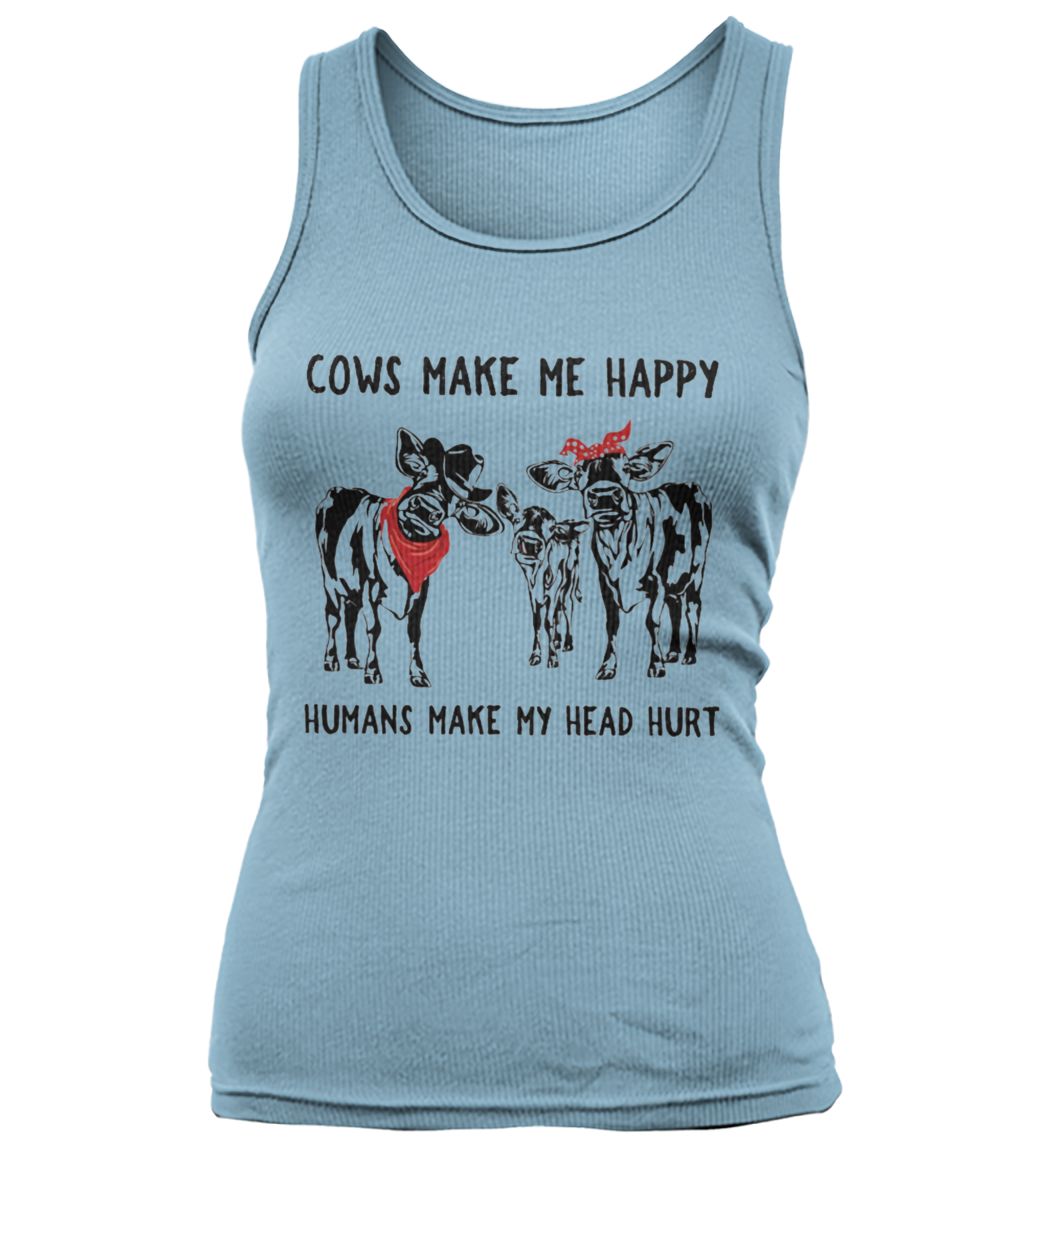 Cows make me happy humans make my head hurt women's tank top